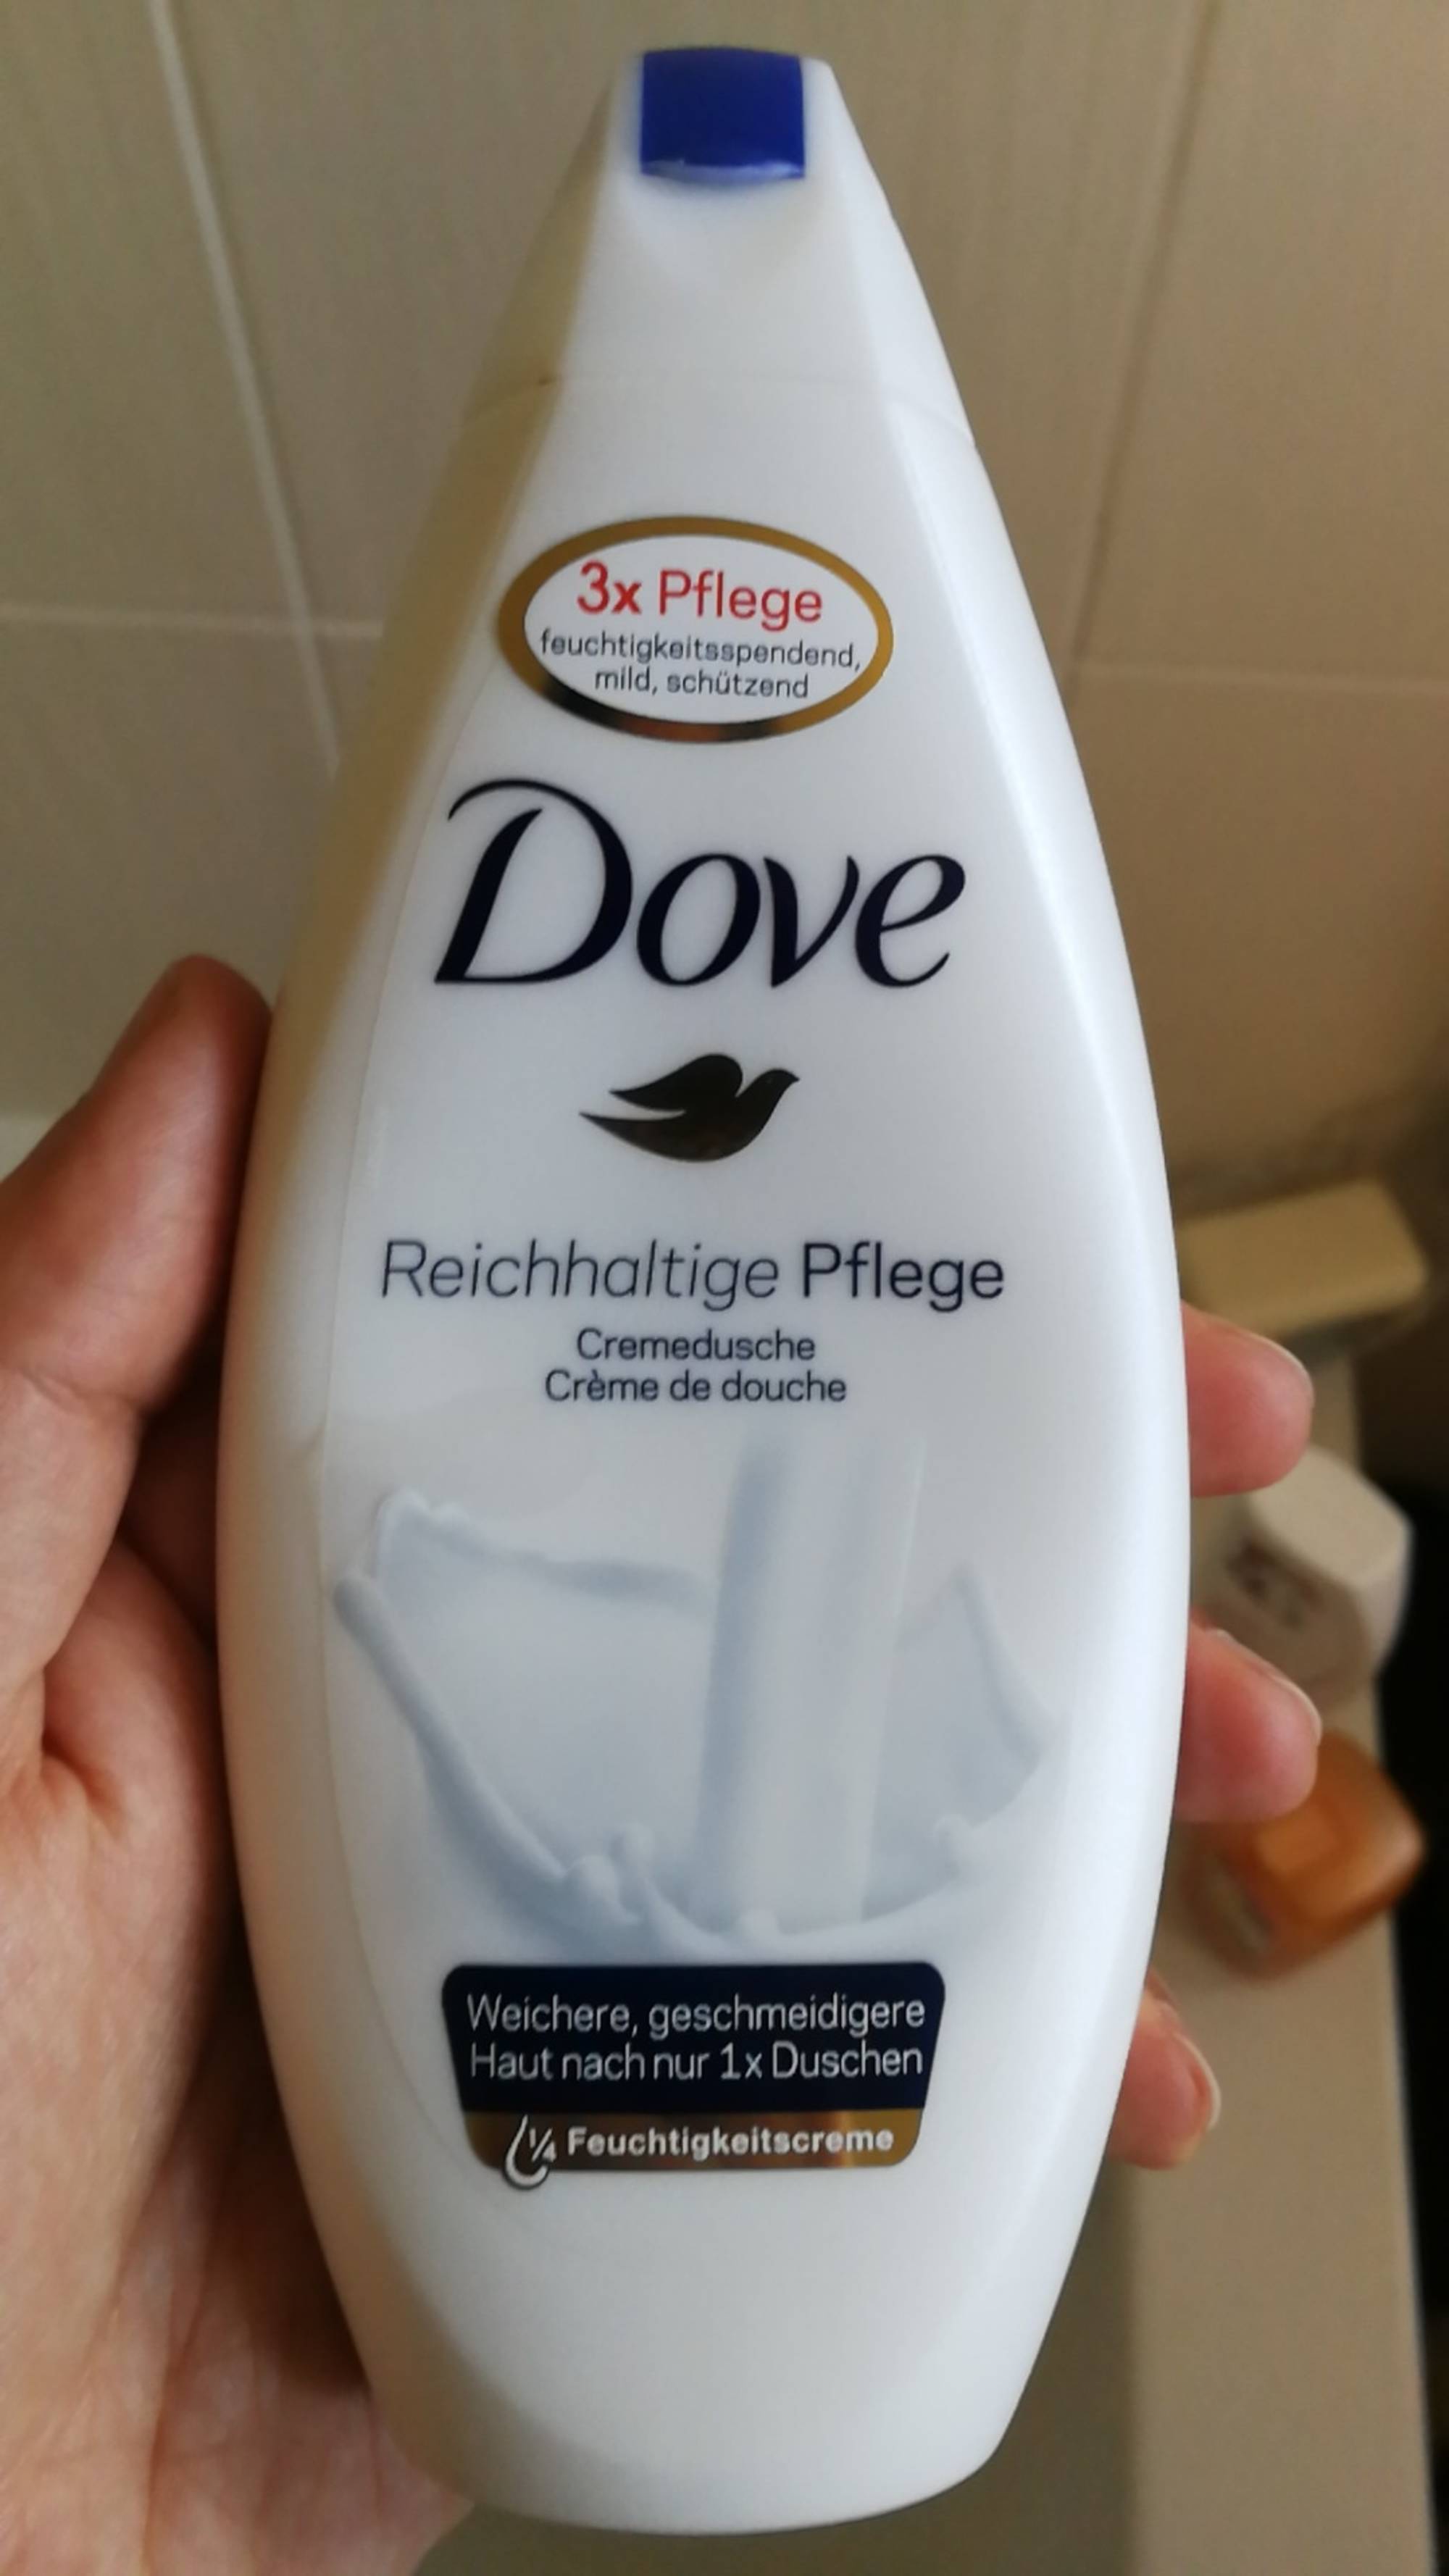 DOVE - Reichhaltige pflege - Creme de douche